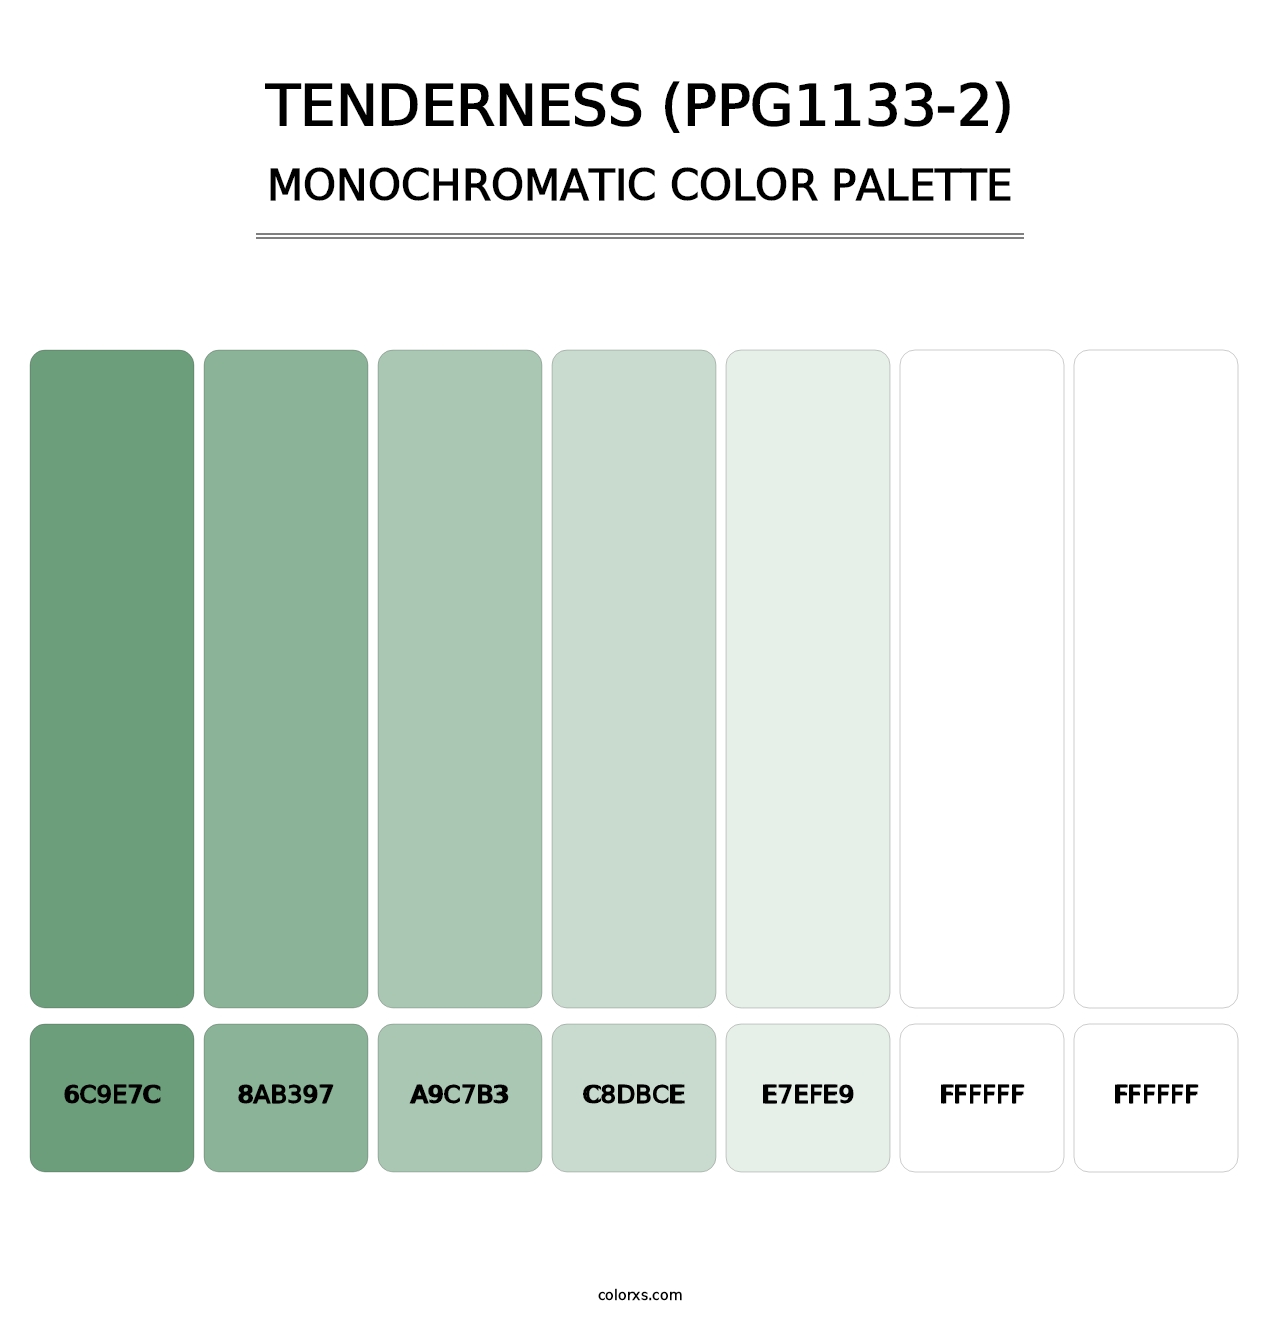 Tenderness (PPG1133-2) - Monochromatic Color Palette